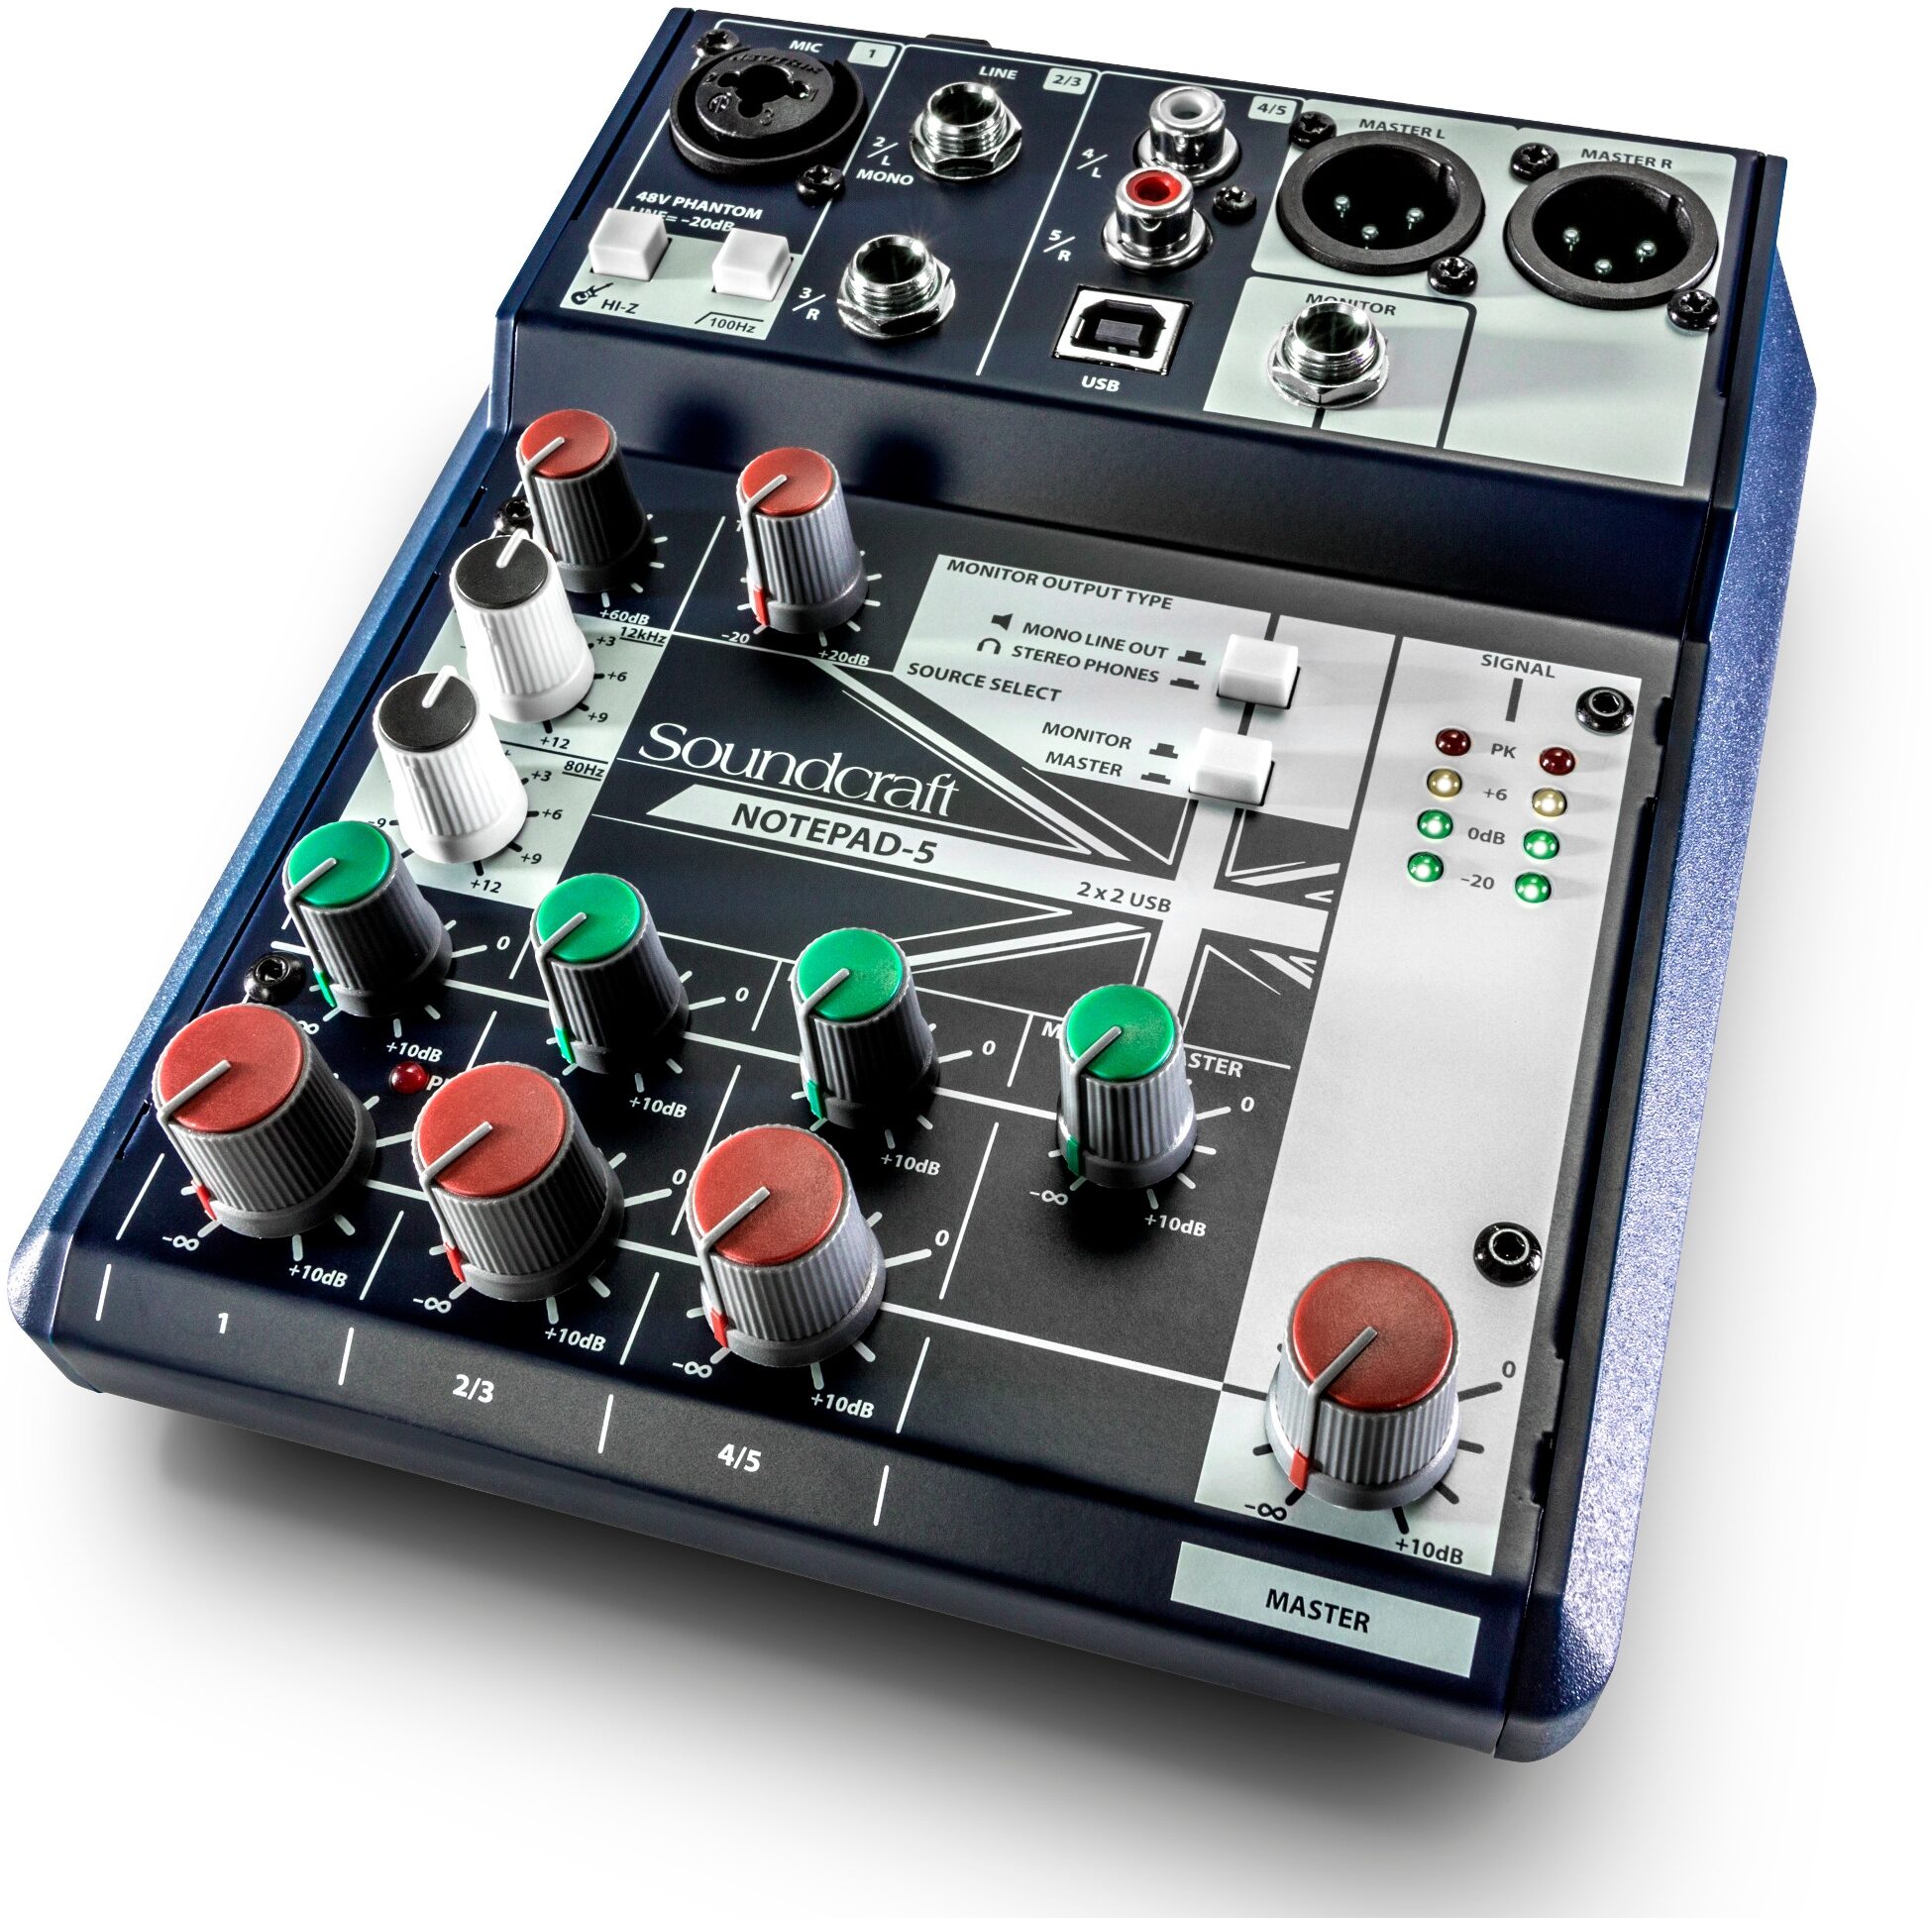 Soundcraft　Notepad-5　Analog　USB　Mixer　zZounds